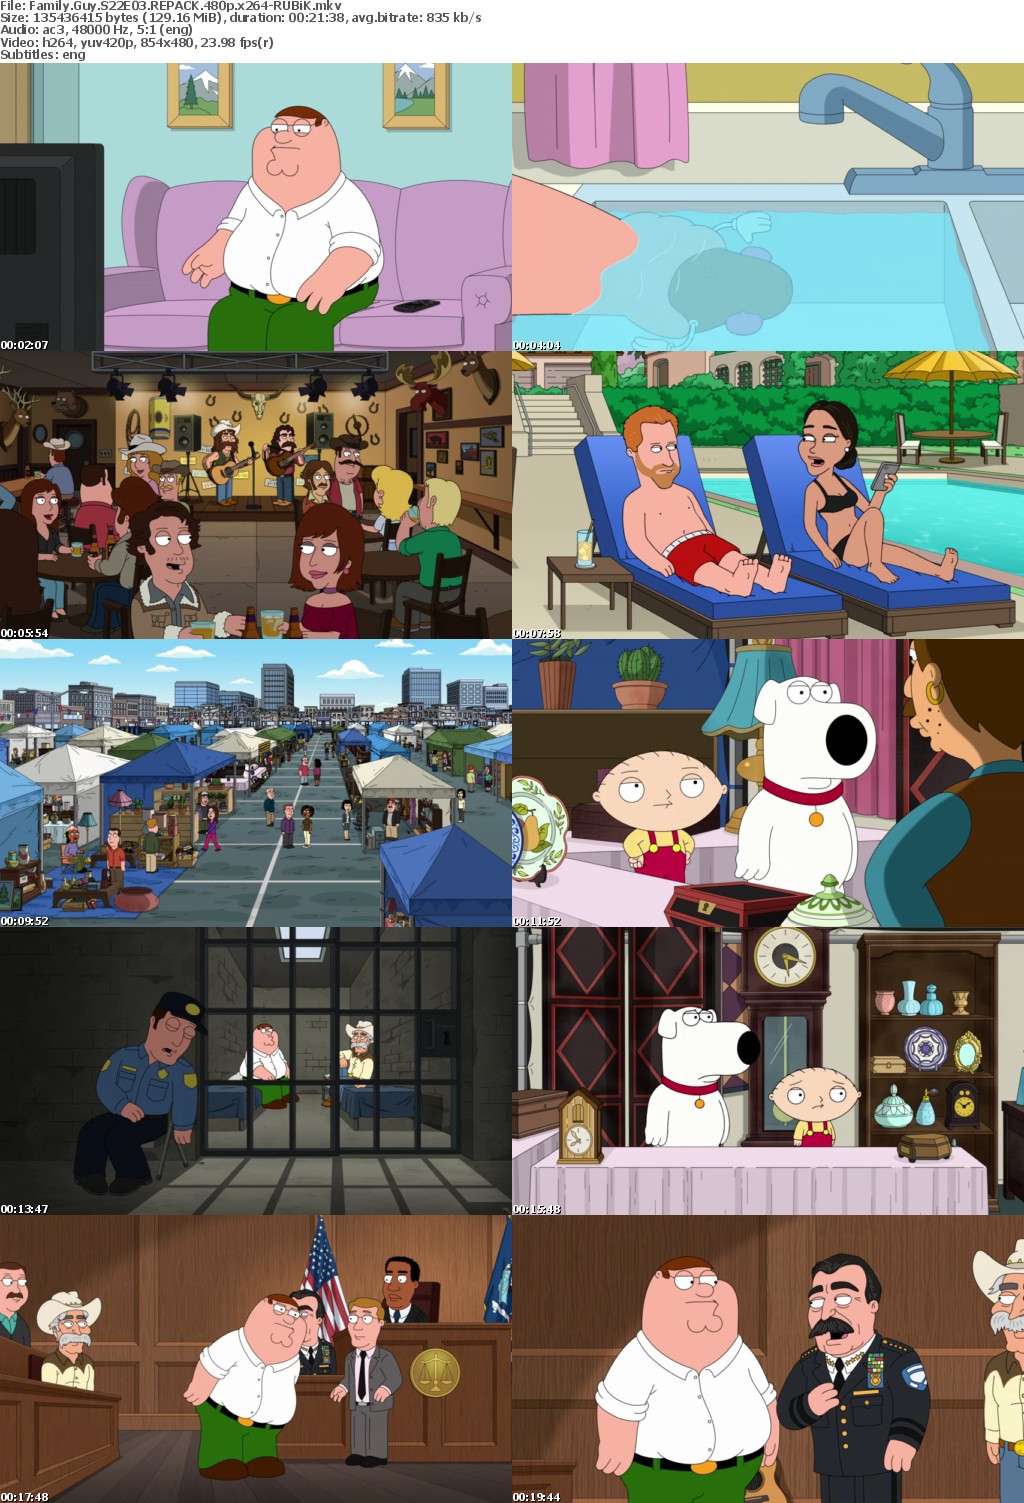 Family Guy S22E03 REPACK 480p x264-RUBiK